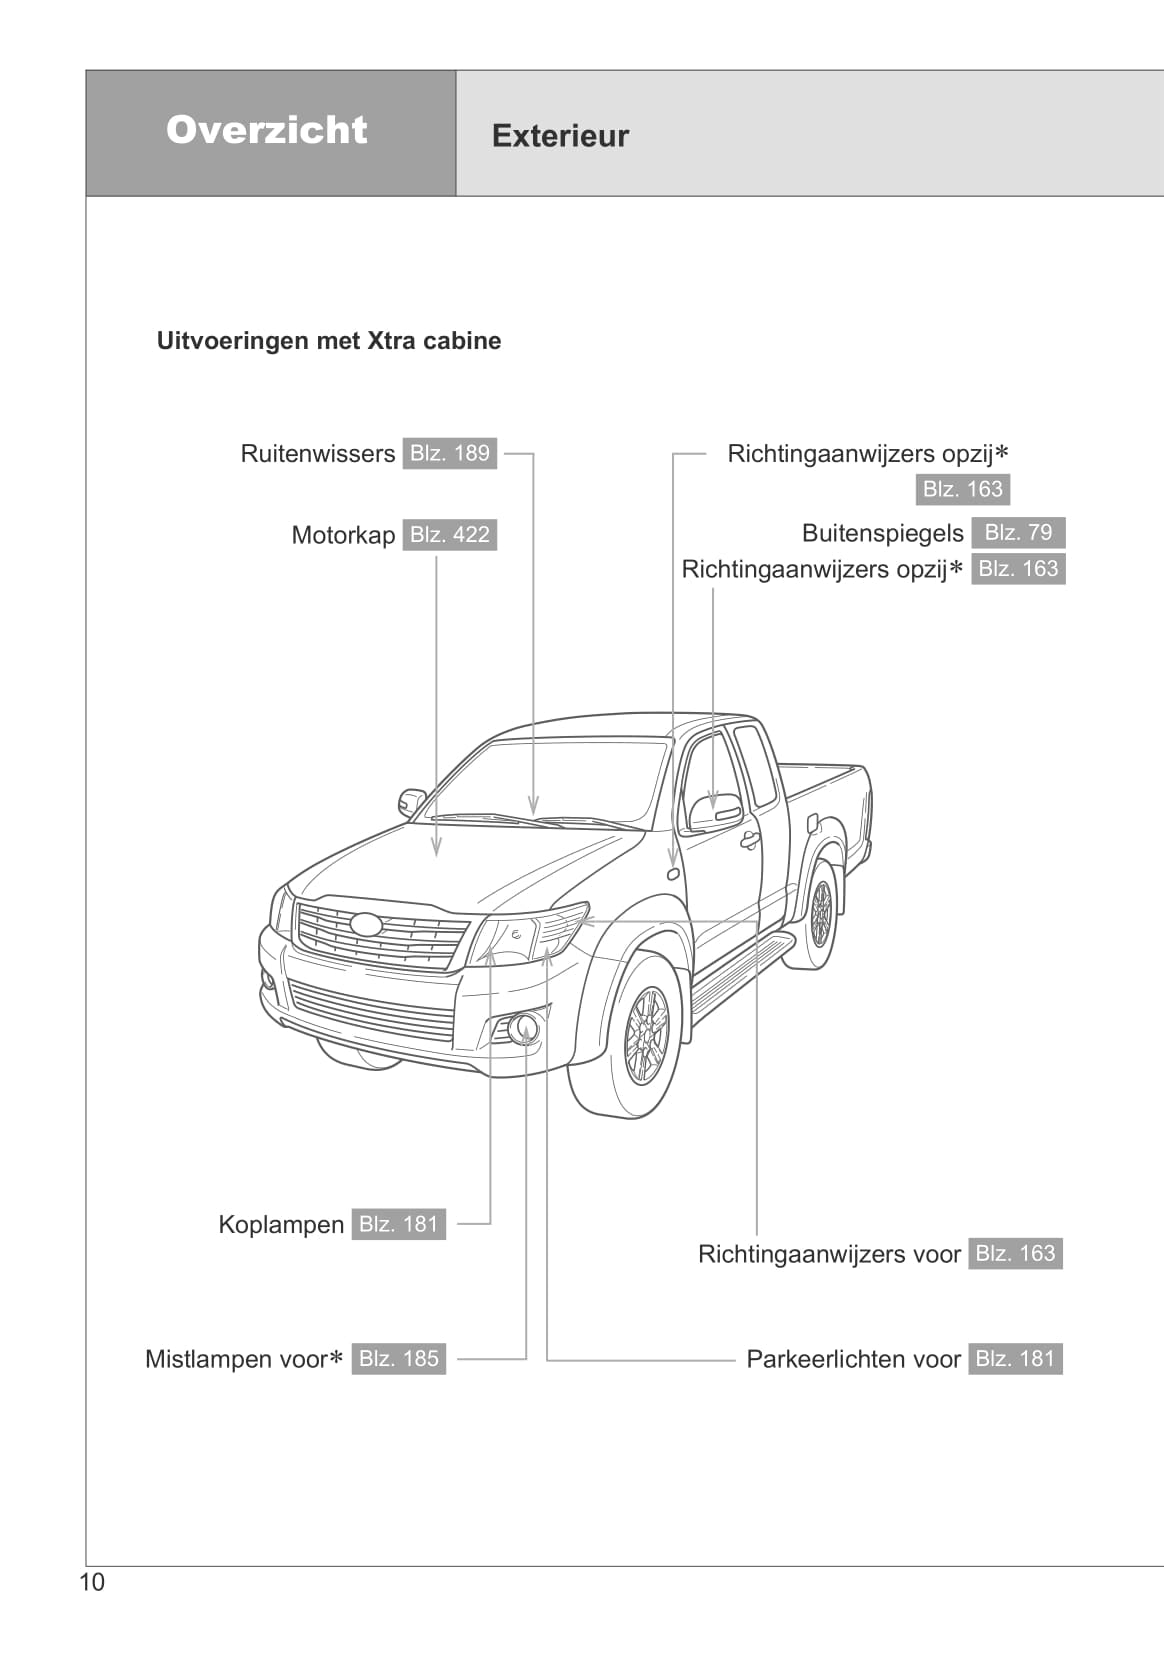 2011-2012 Toyota Hilux Gebruikershandleiding | Nederlands